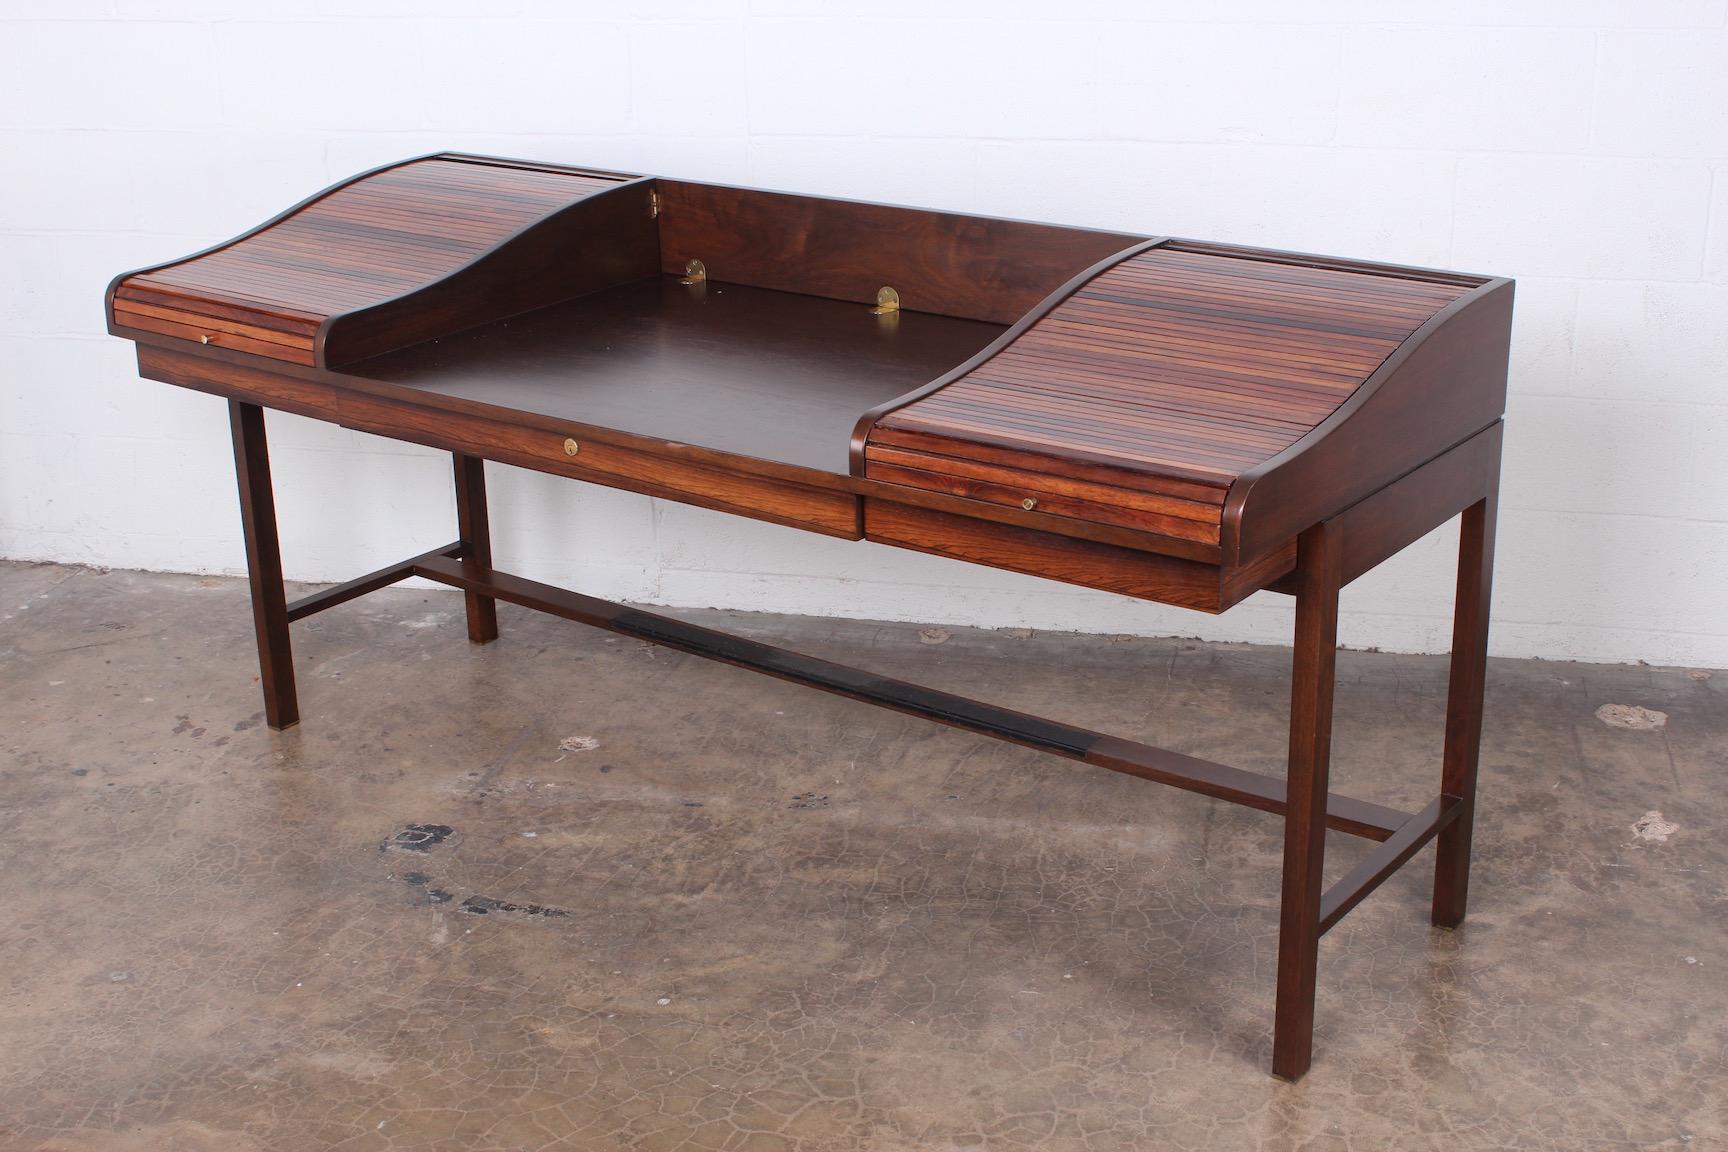 antique roll top desks for sale